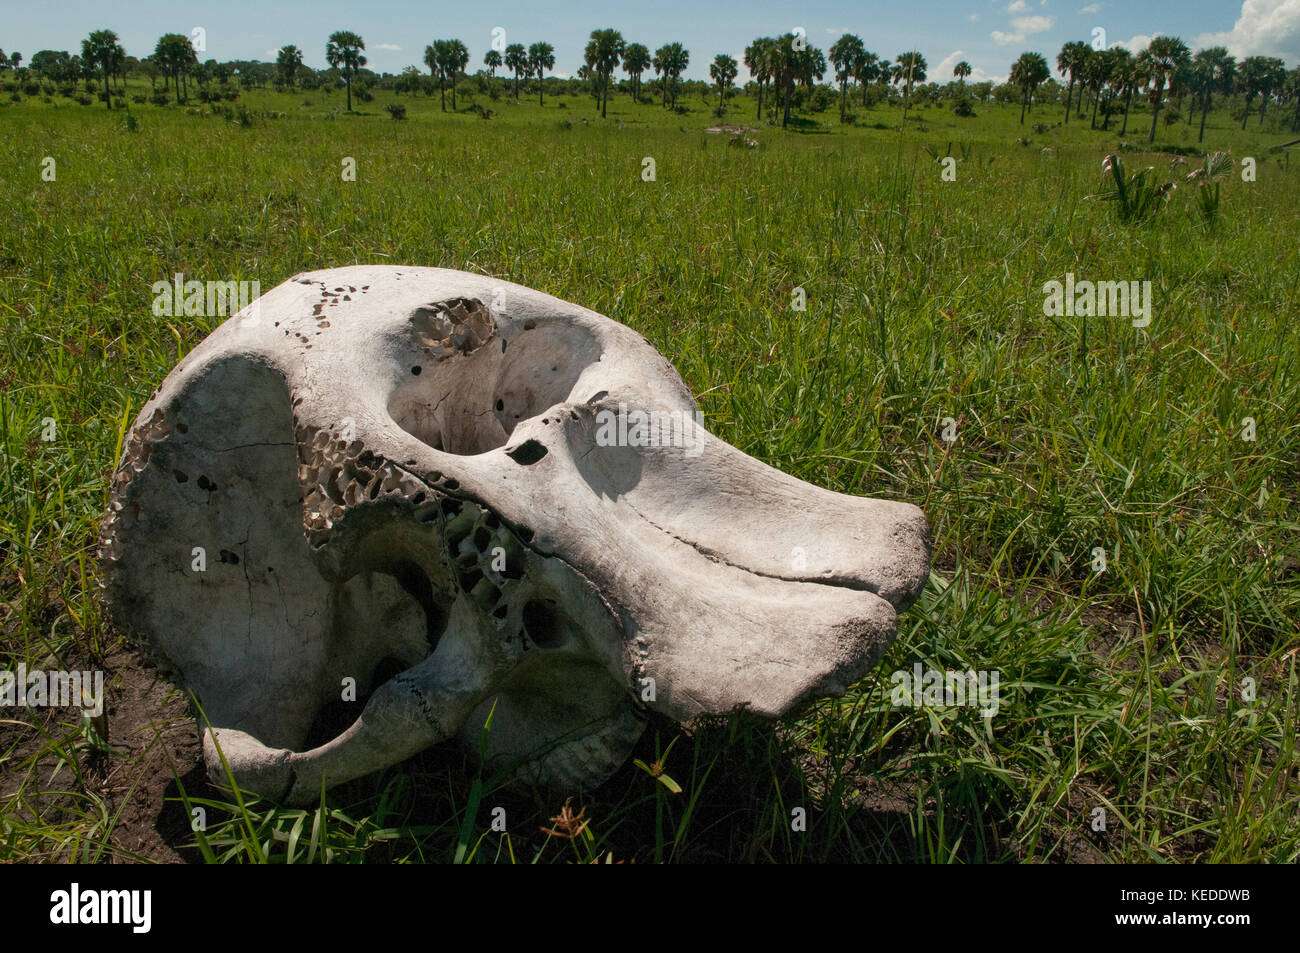 Skull of illegally killed elephant. Tusks missing. Stock Photo